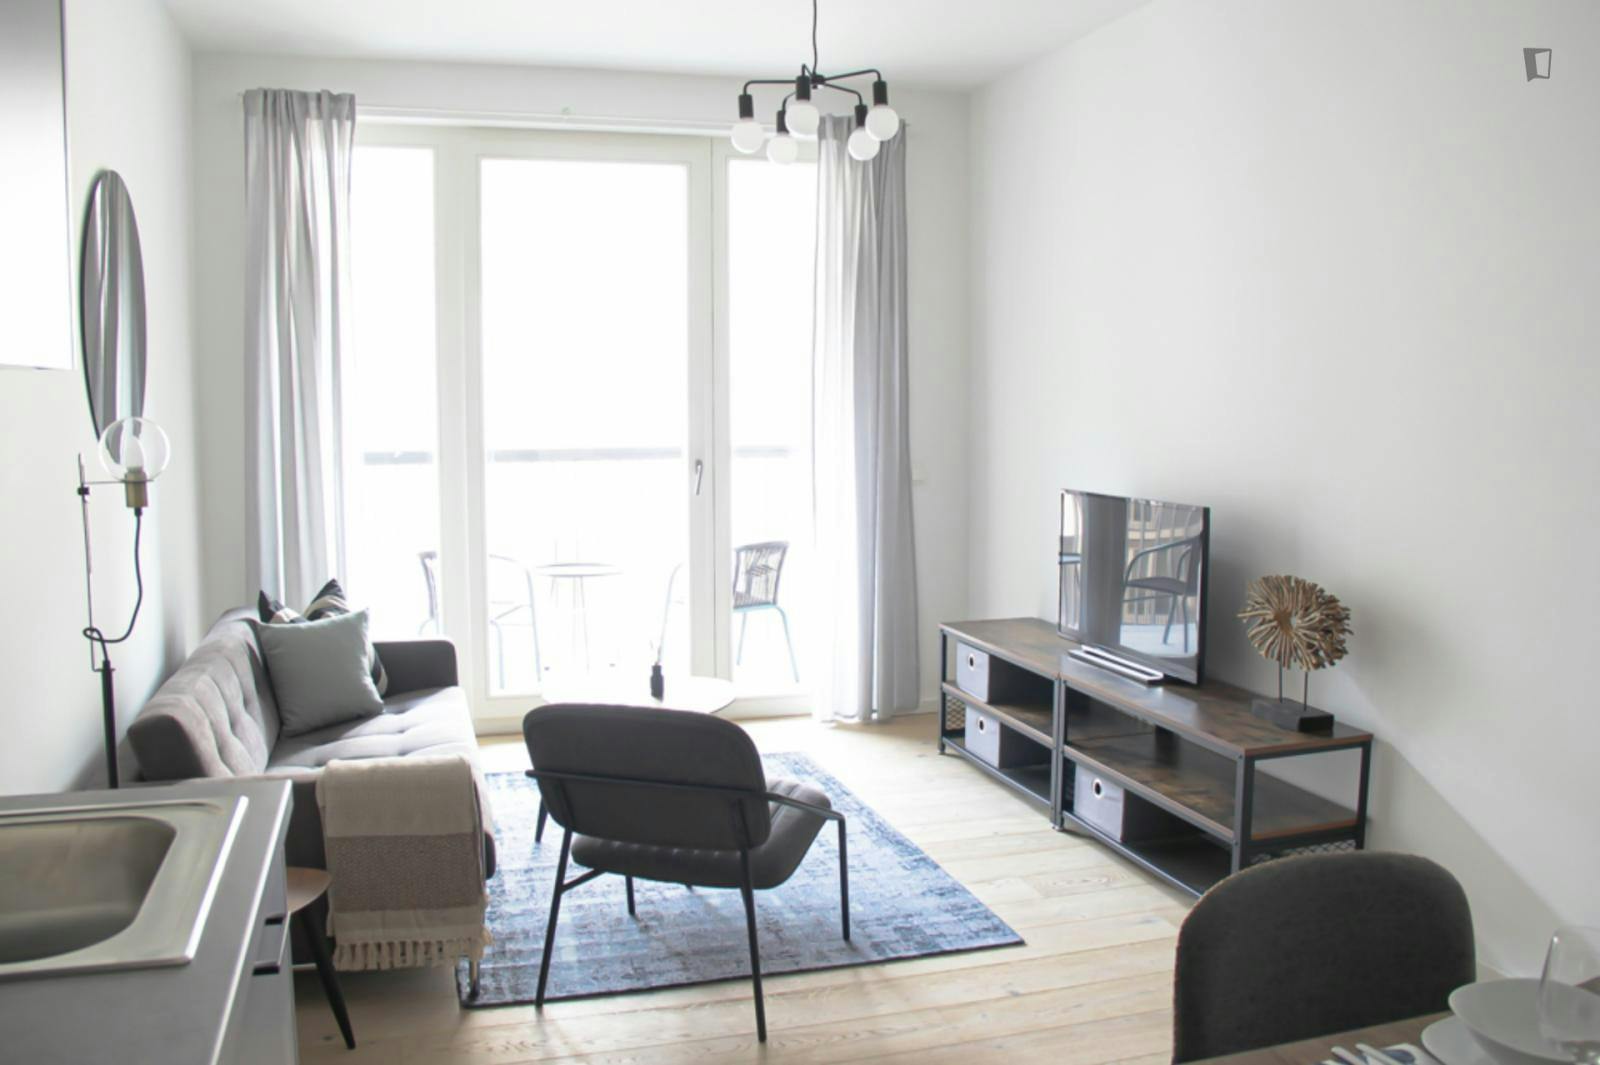 Bright 1-bedroom apartment close to Bornholmer Straße metro station